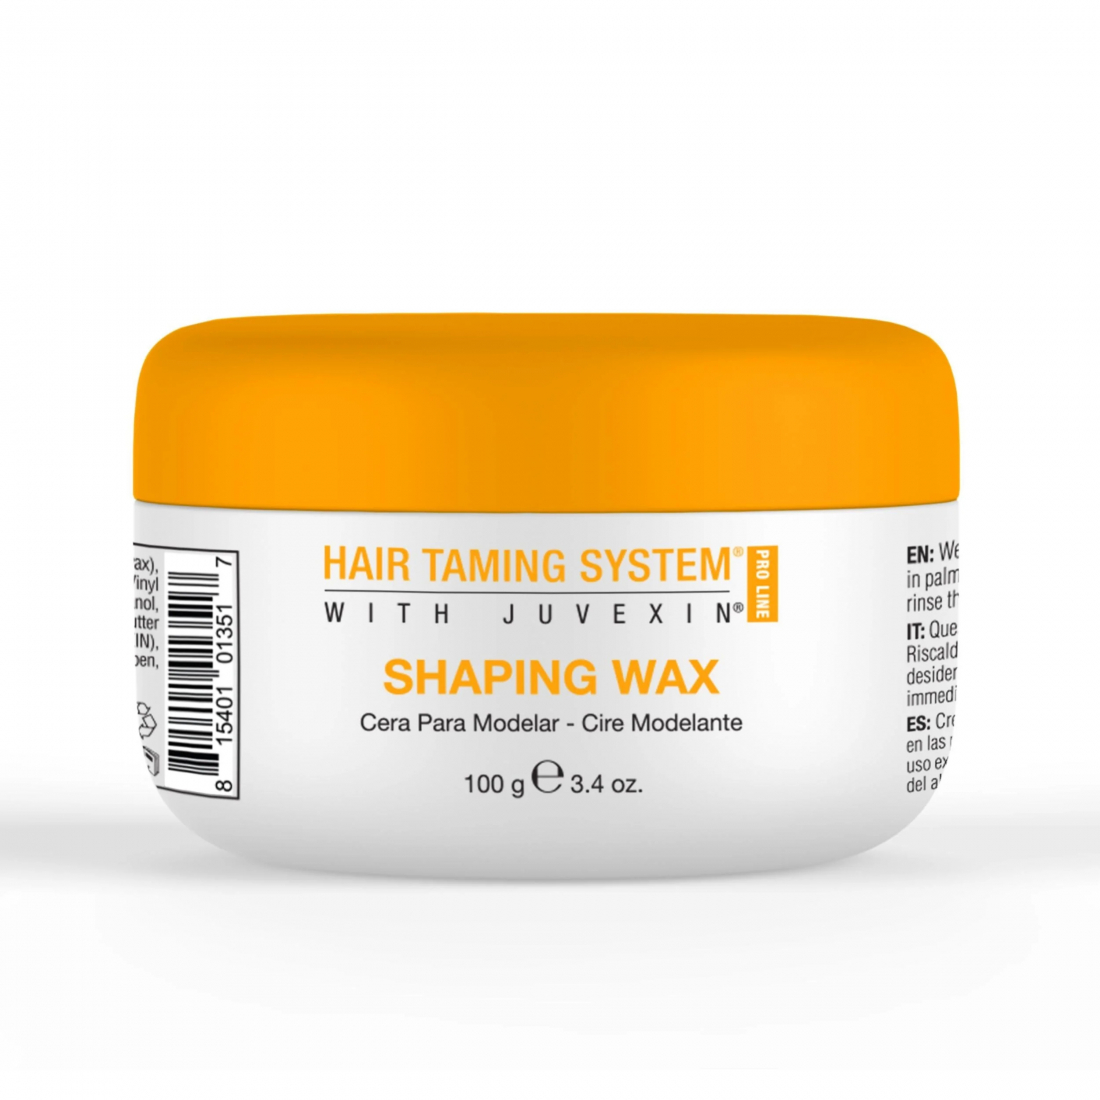 'Shaping' Wax - 100 g